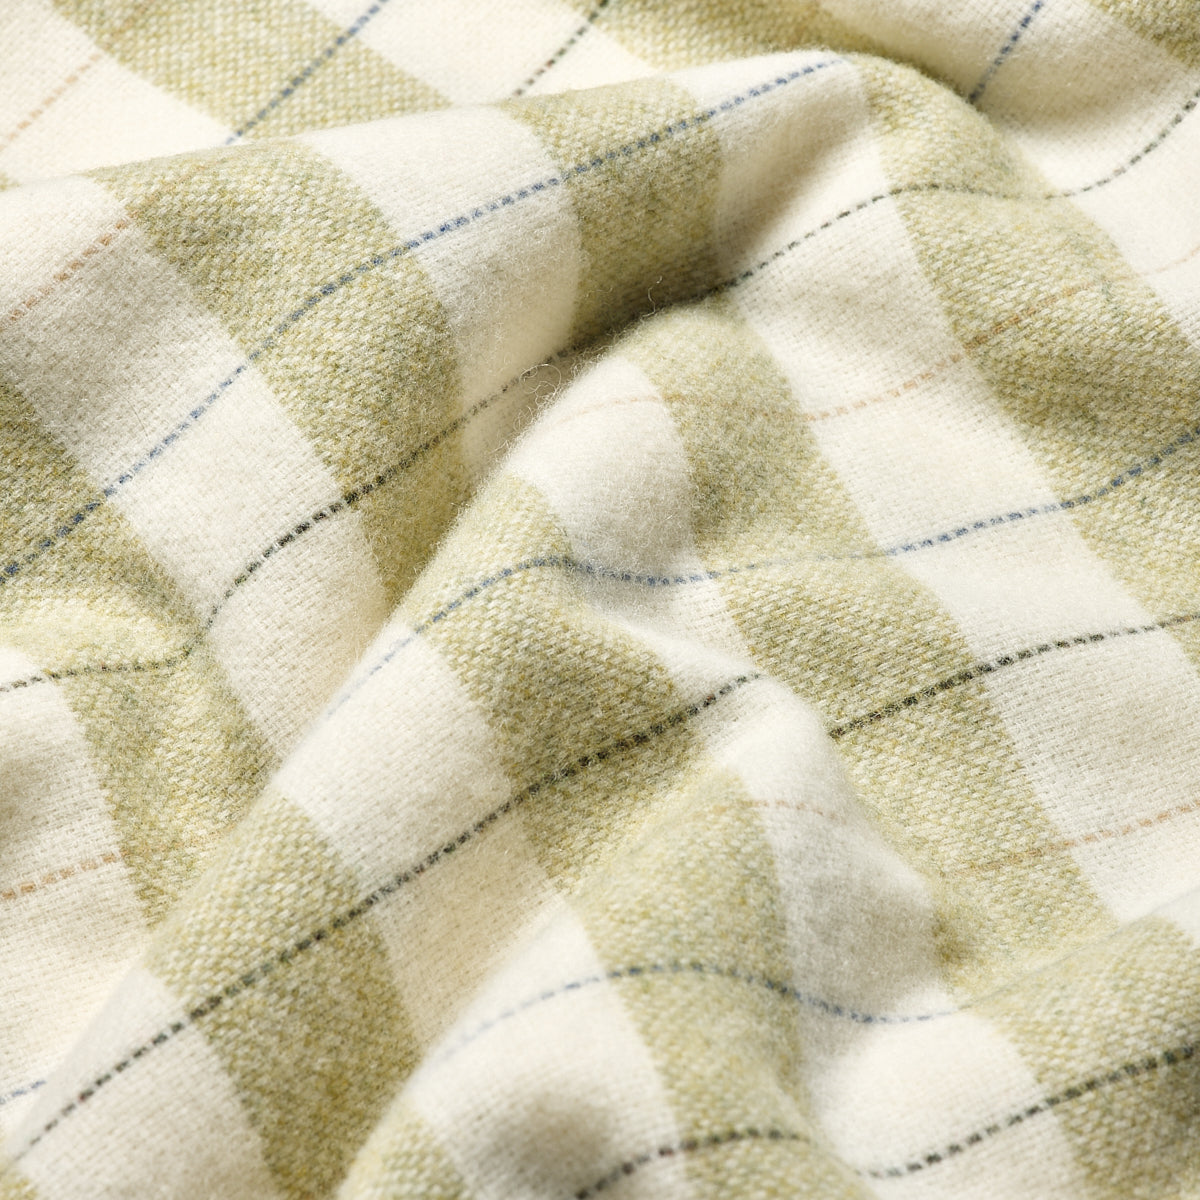 Apple Checked Stripe Wool Blanket - Piglet in Bed